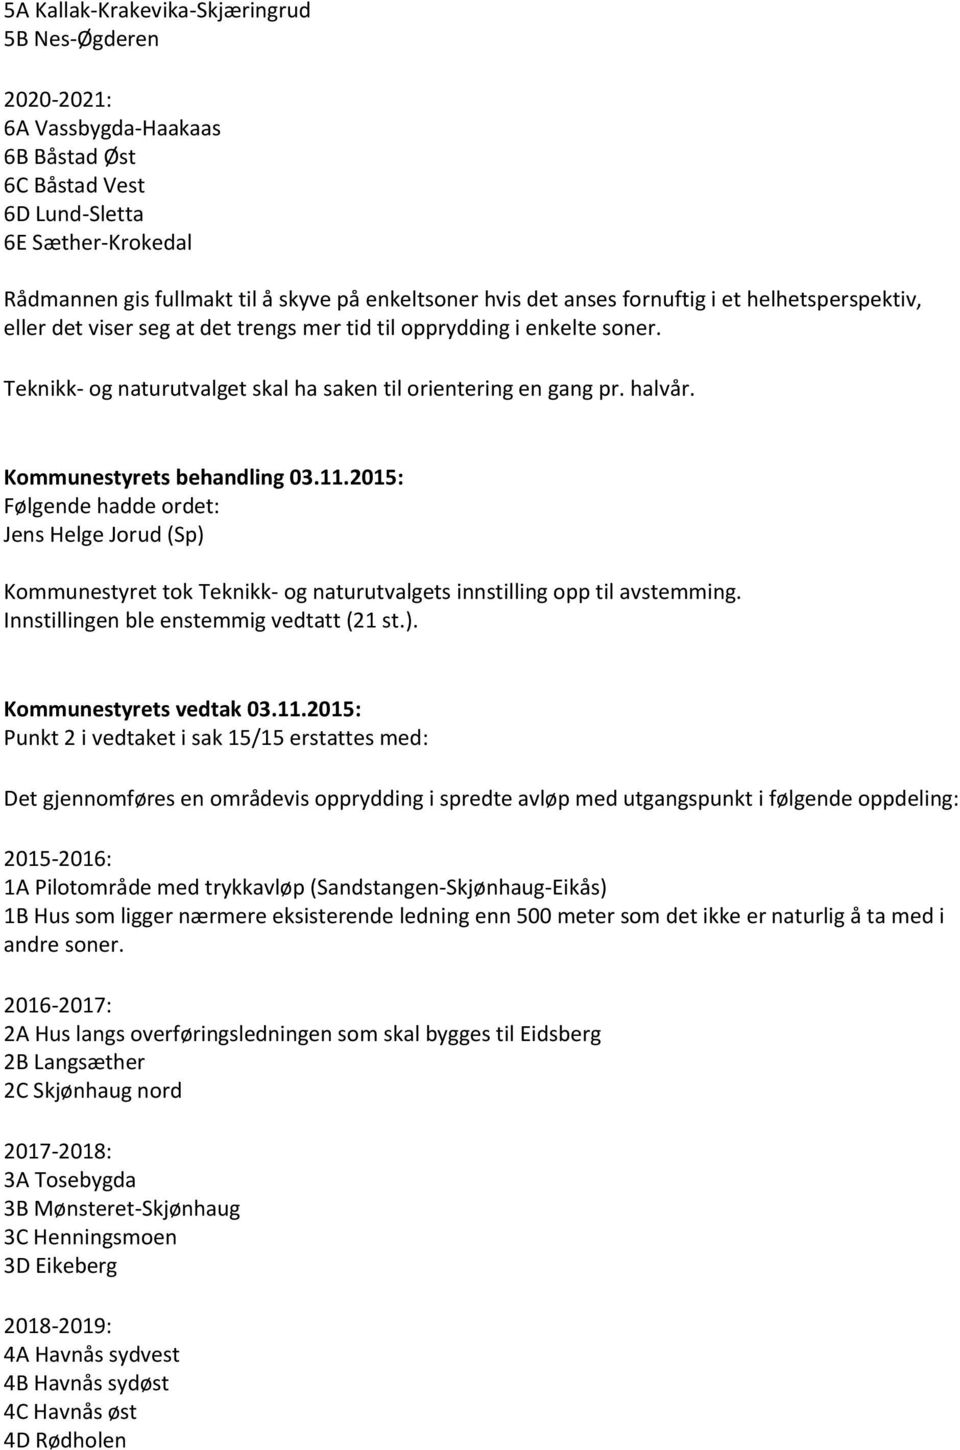 Kommunestyrets behandling 03.11.2015: Jens Helge Jorud (Sp) 